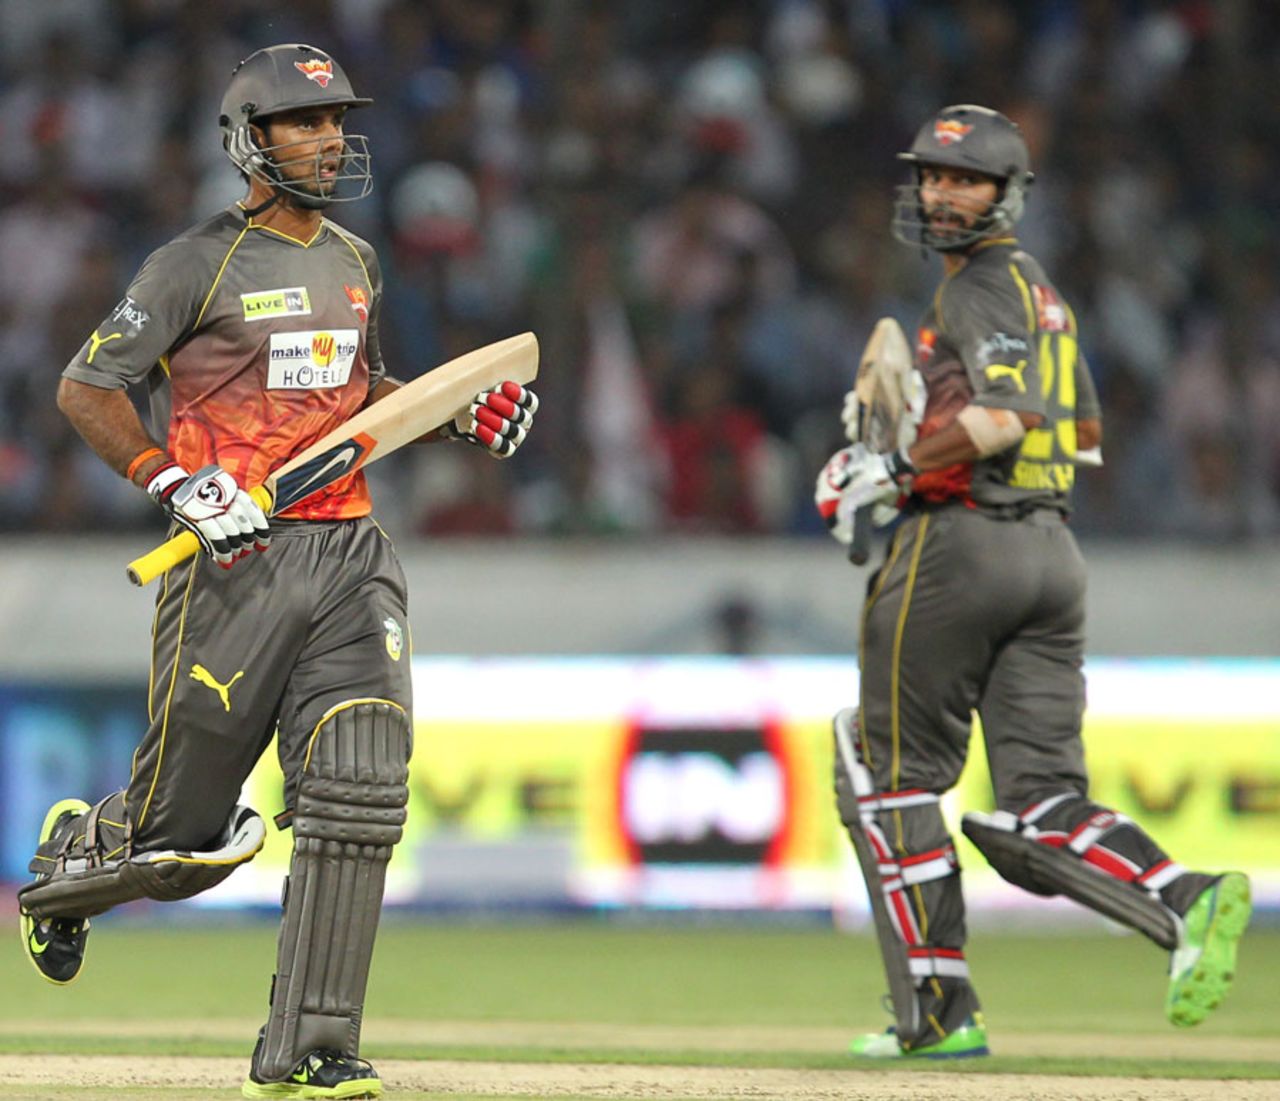 Hanuma Vihari and Shikhar Dhawan complete a single, Sunrisers Hyderabad v Mumbai Indians, IPL, Hyderabad, May 1, 2013